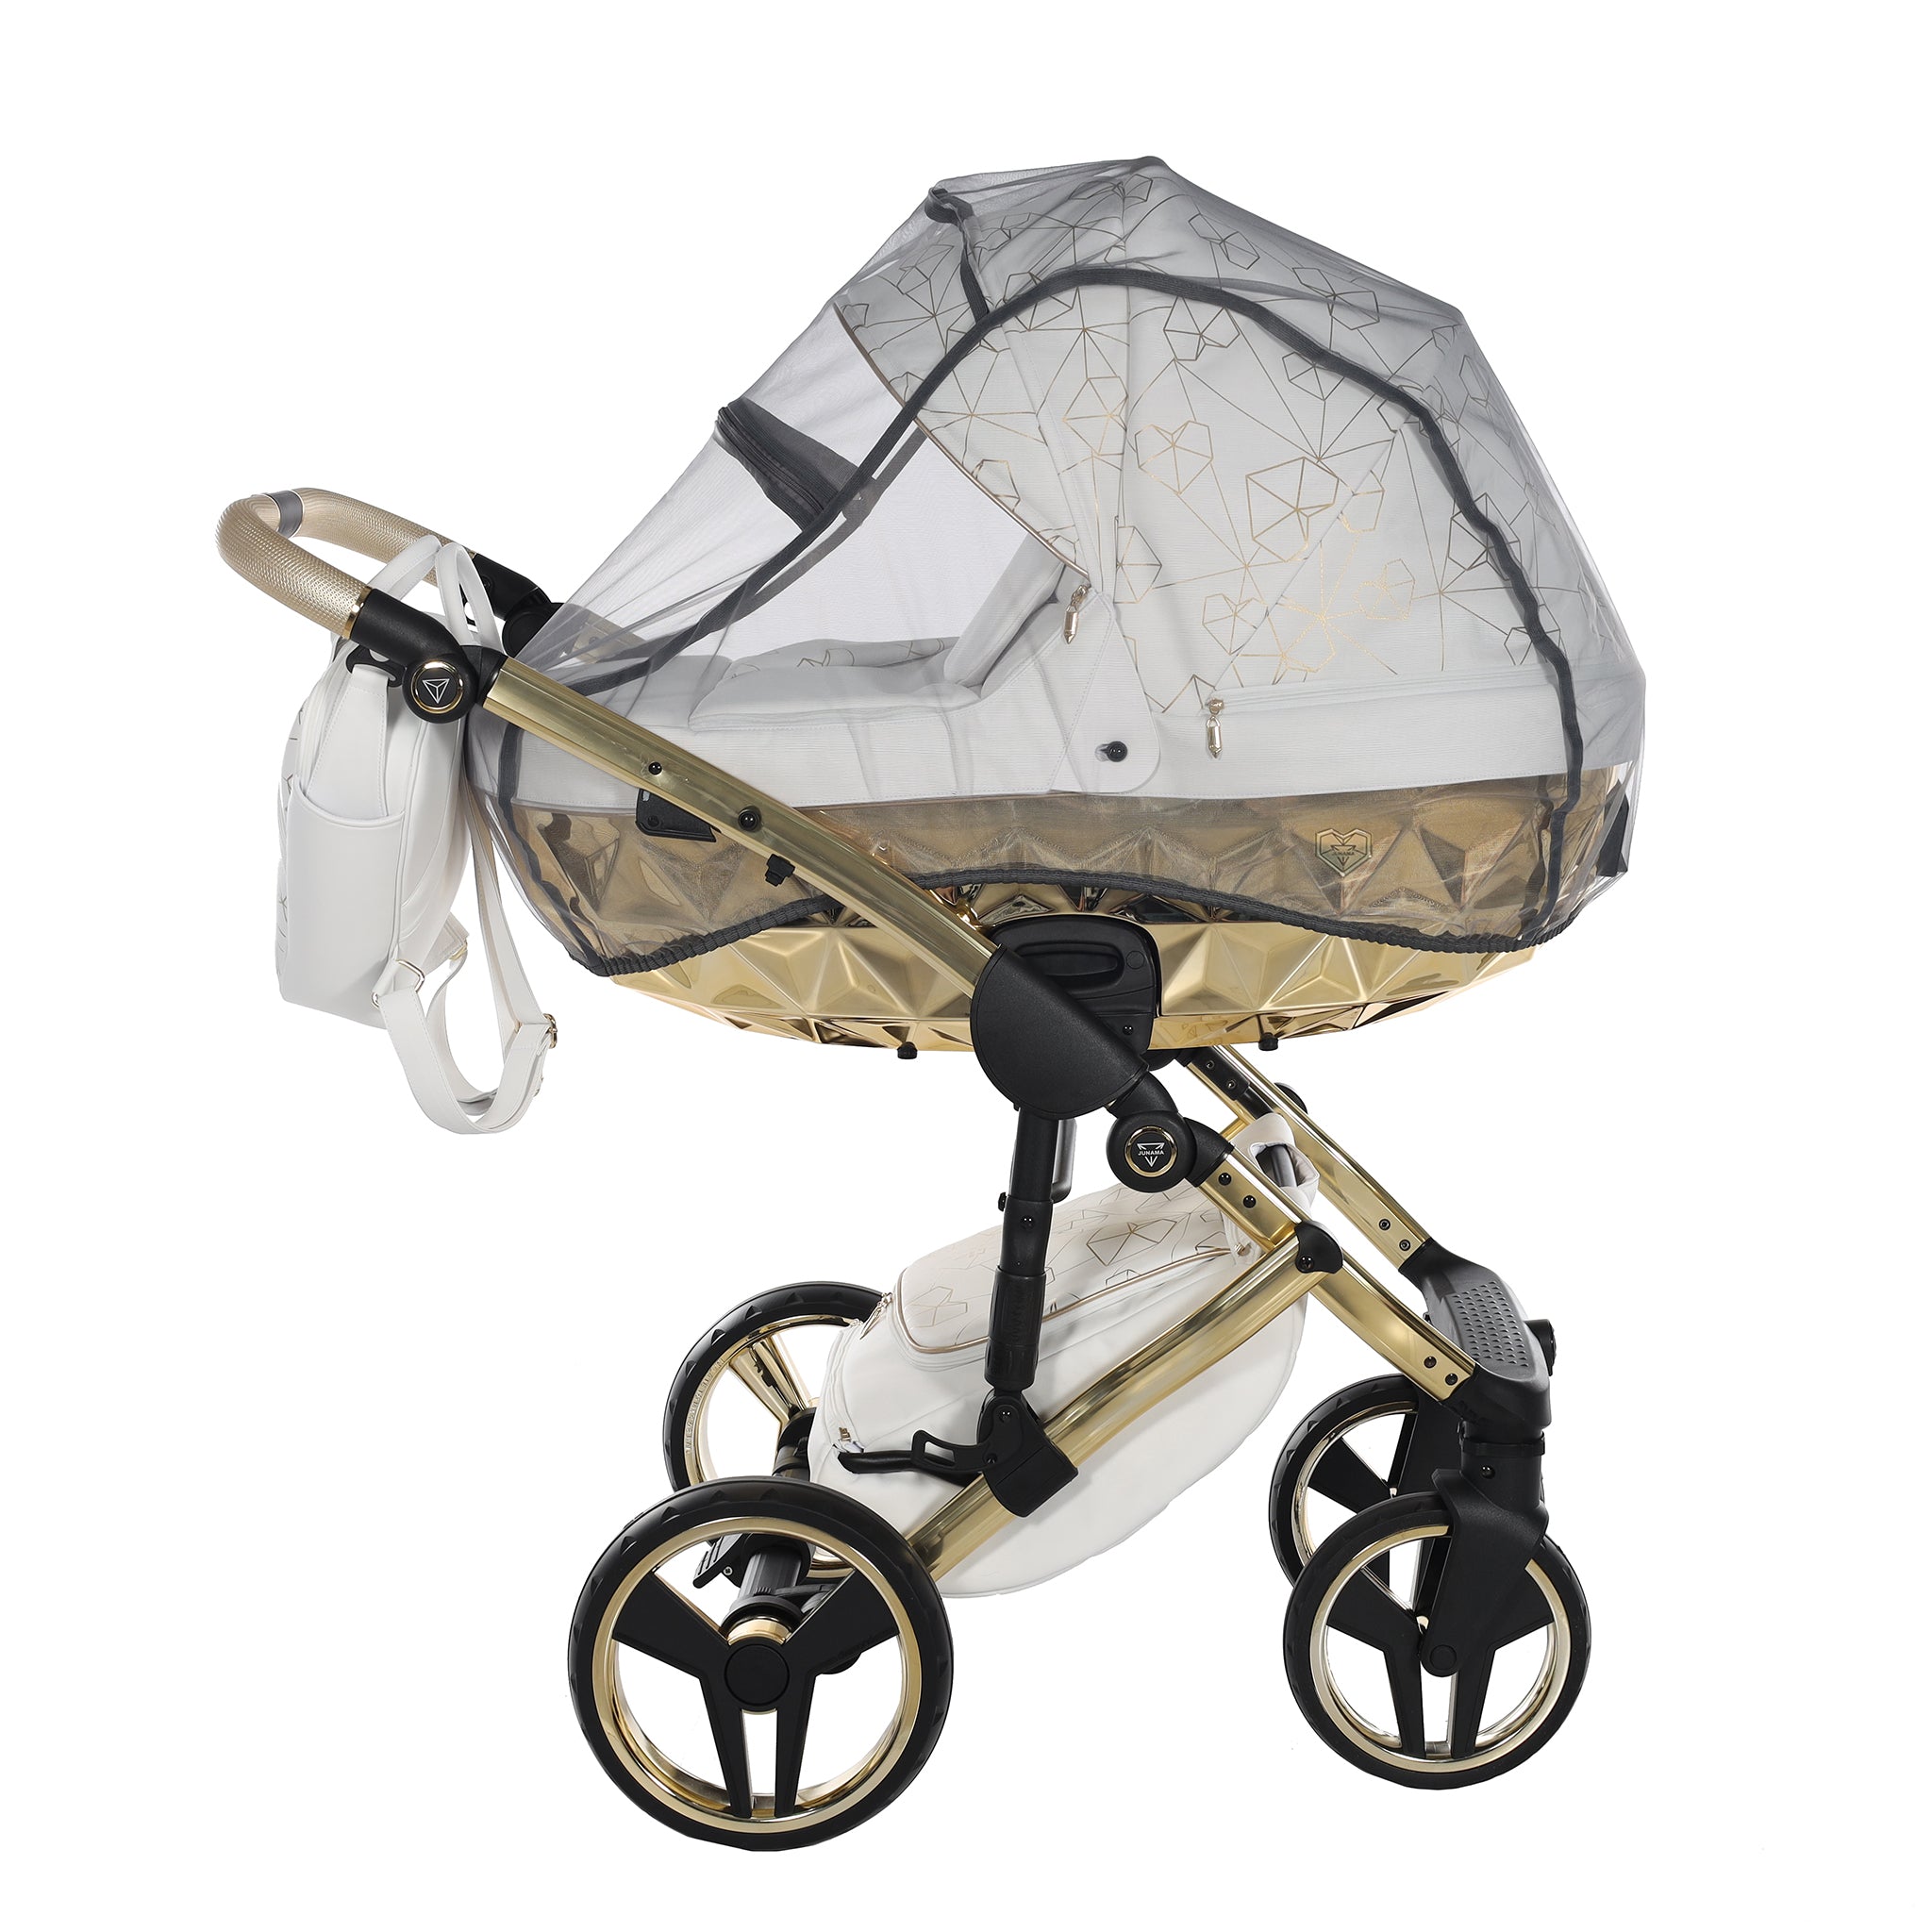 Junama Heart, baby prams or stroller 2 in 1 - White and Gold, Code number: JUNHERT01